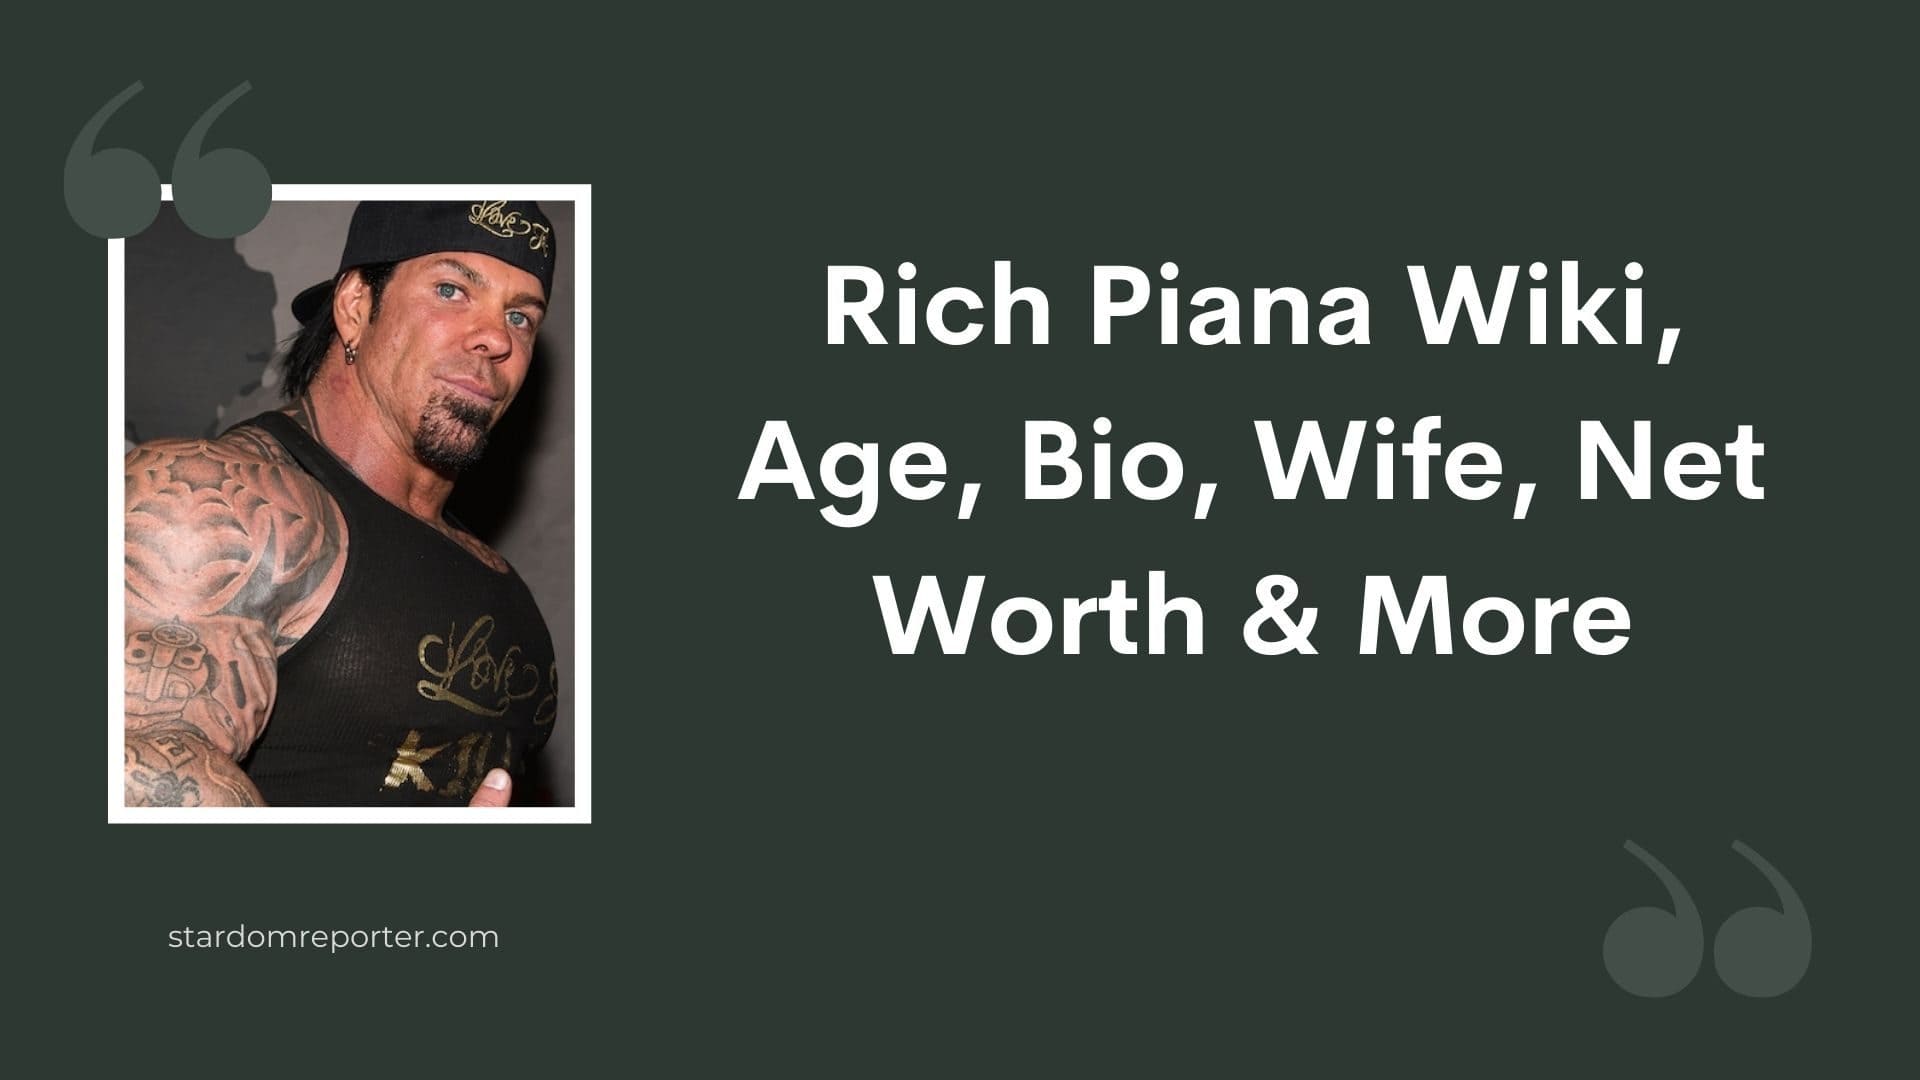 Rich Piana Wiki, Age, Bio, Wife, Net Worth & More - 29